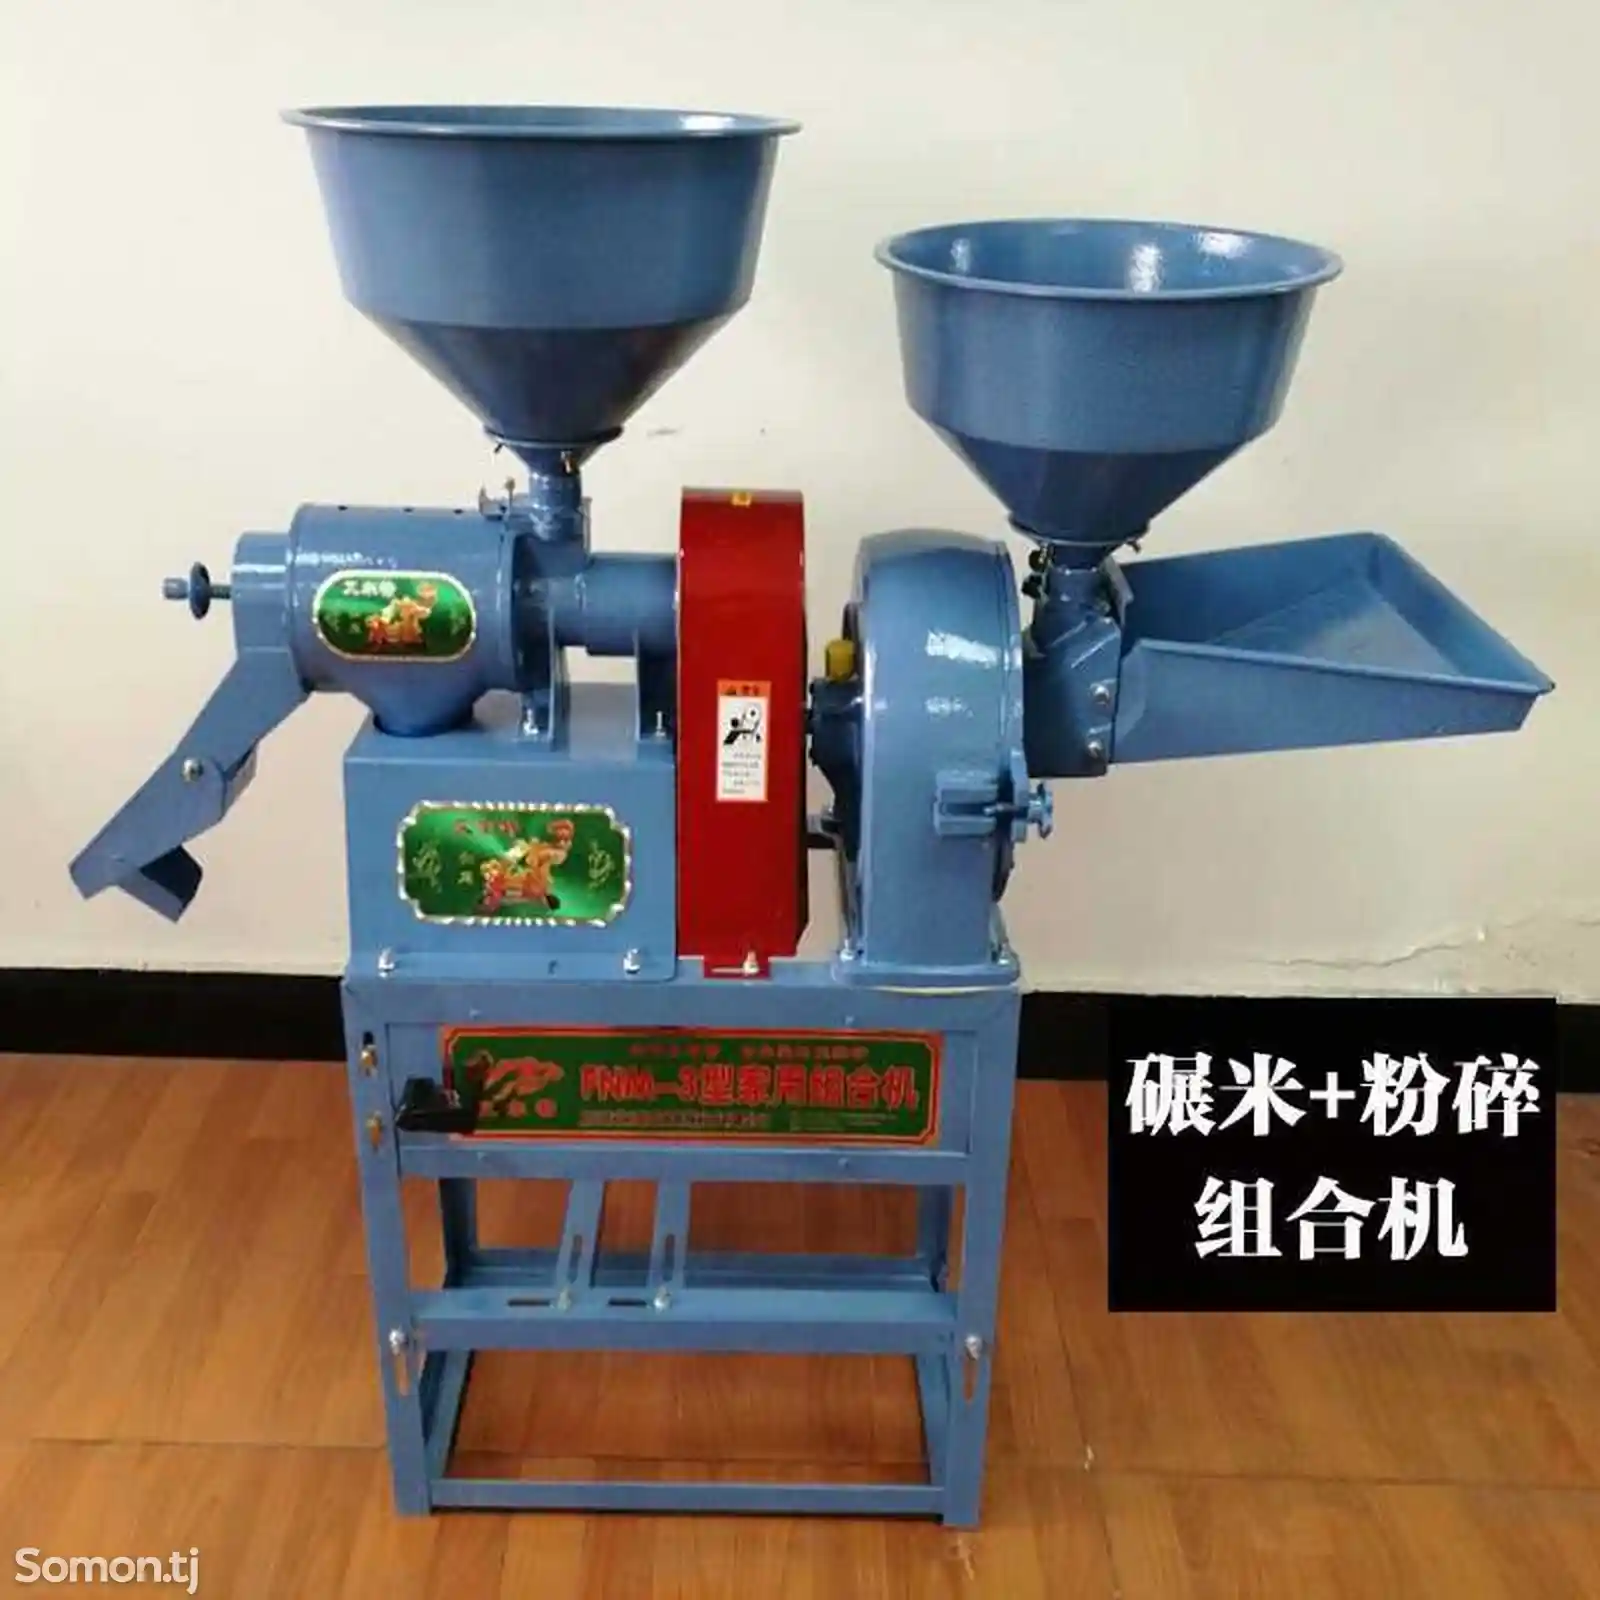 Аппарат для очистки риса-1